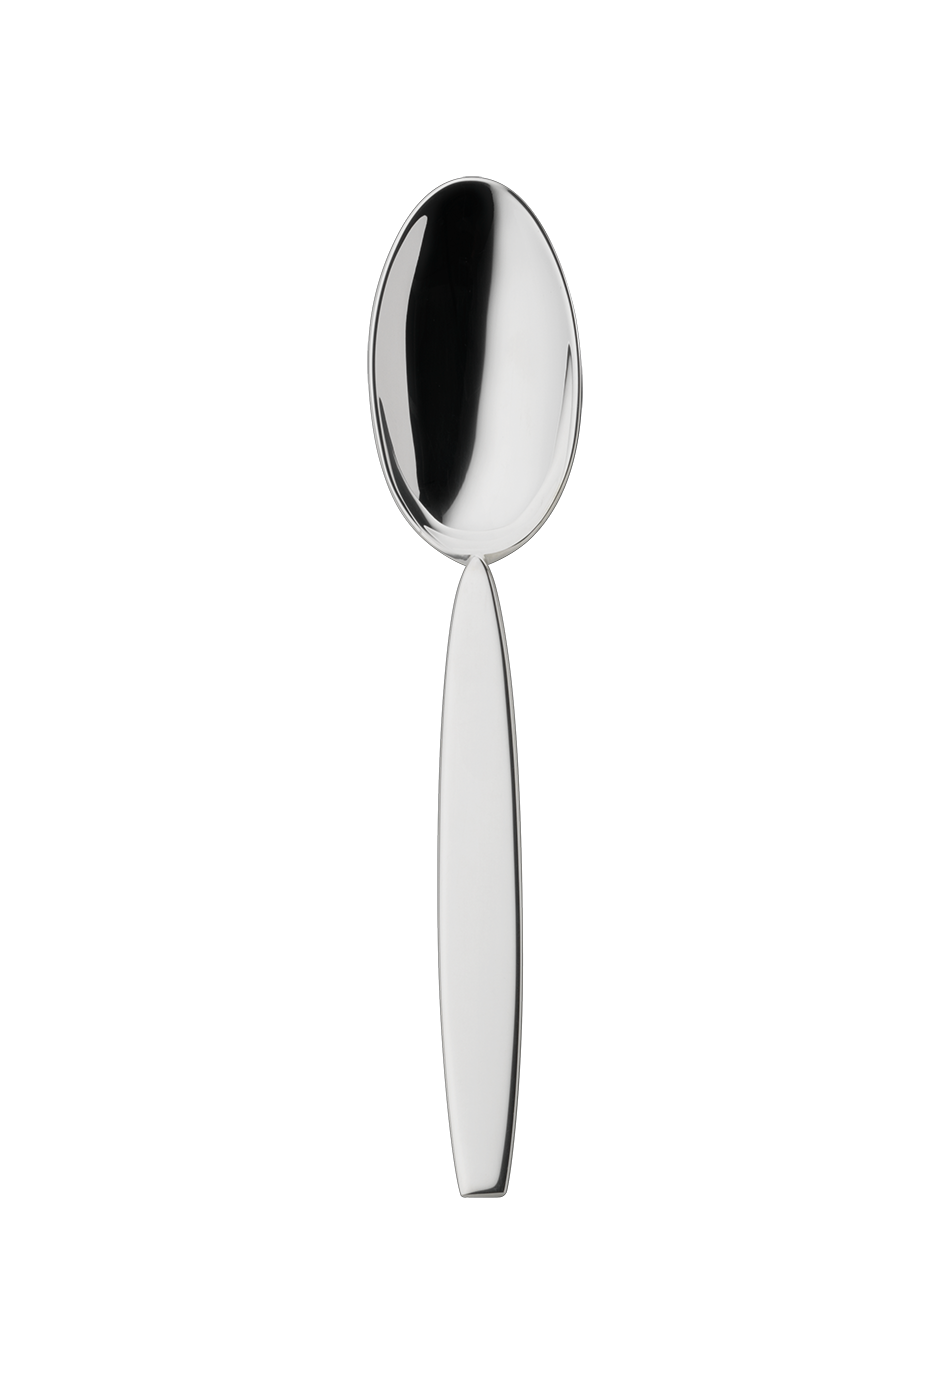 12" Coffee Spoon 15 Cm (150g massive silverplated)